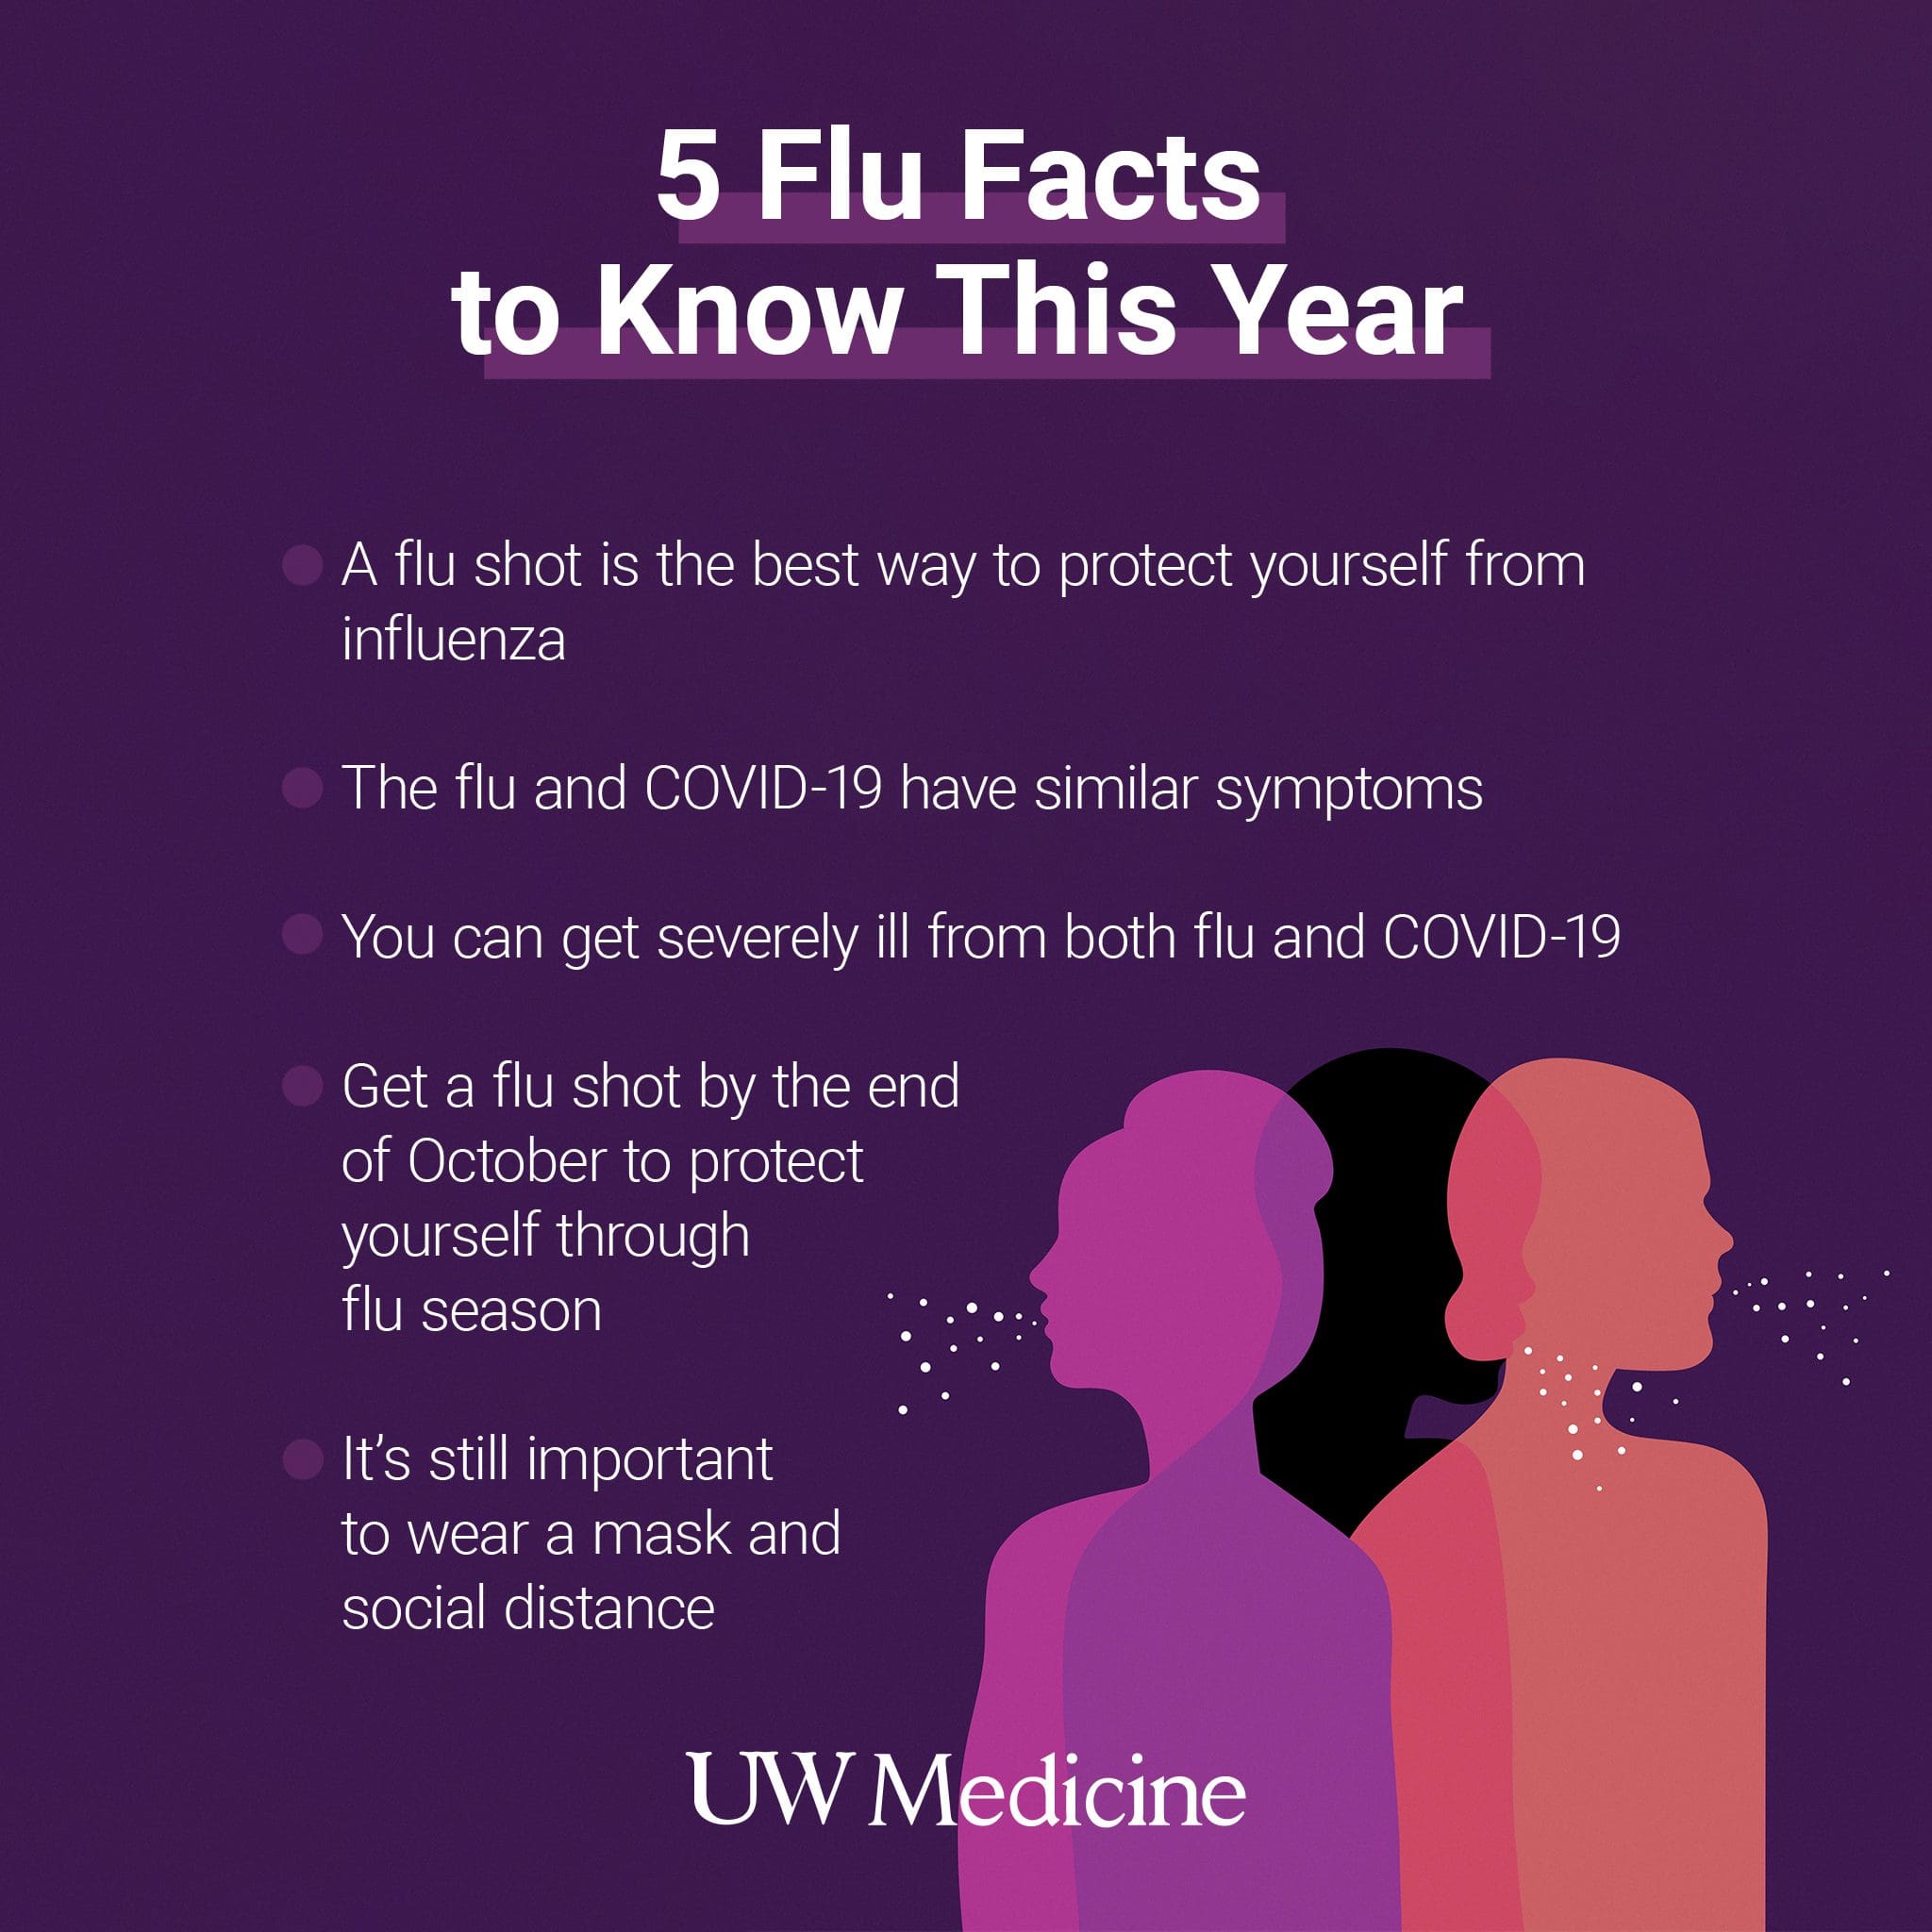 5 flu facts illustration